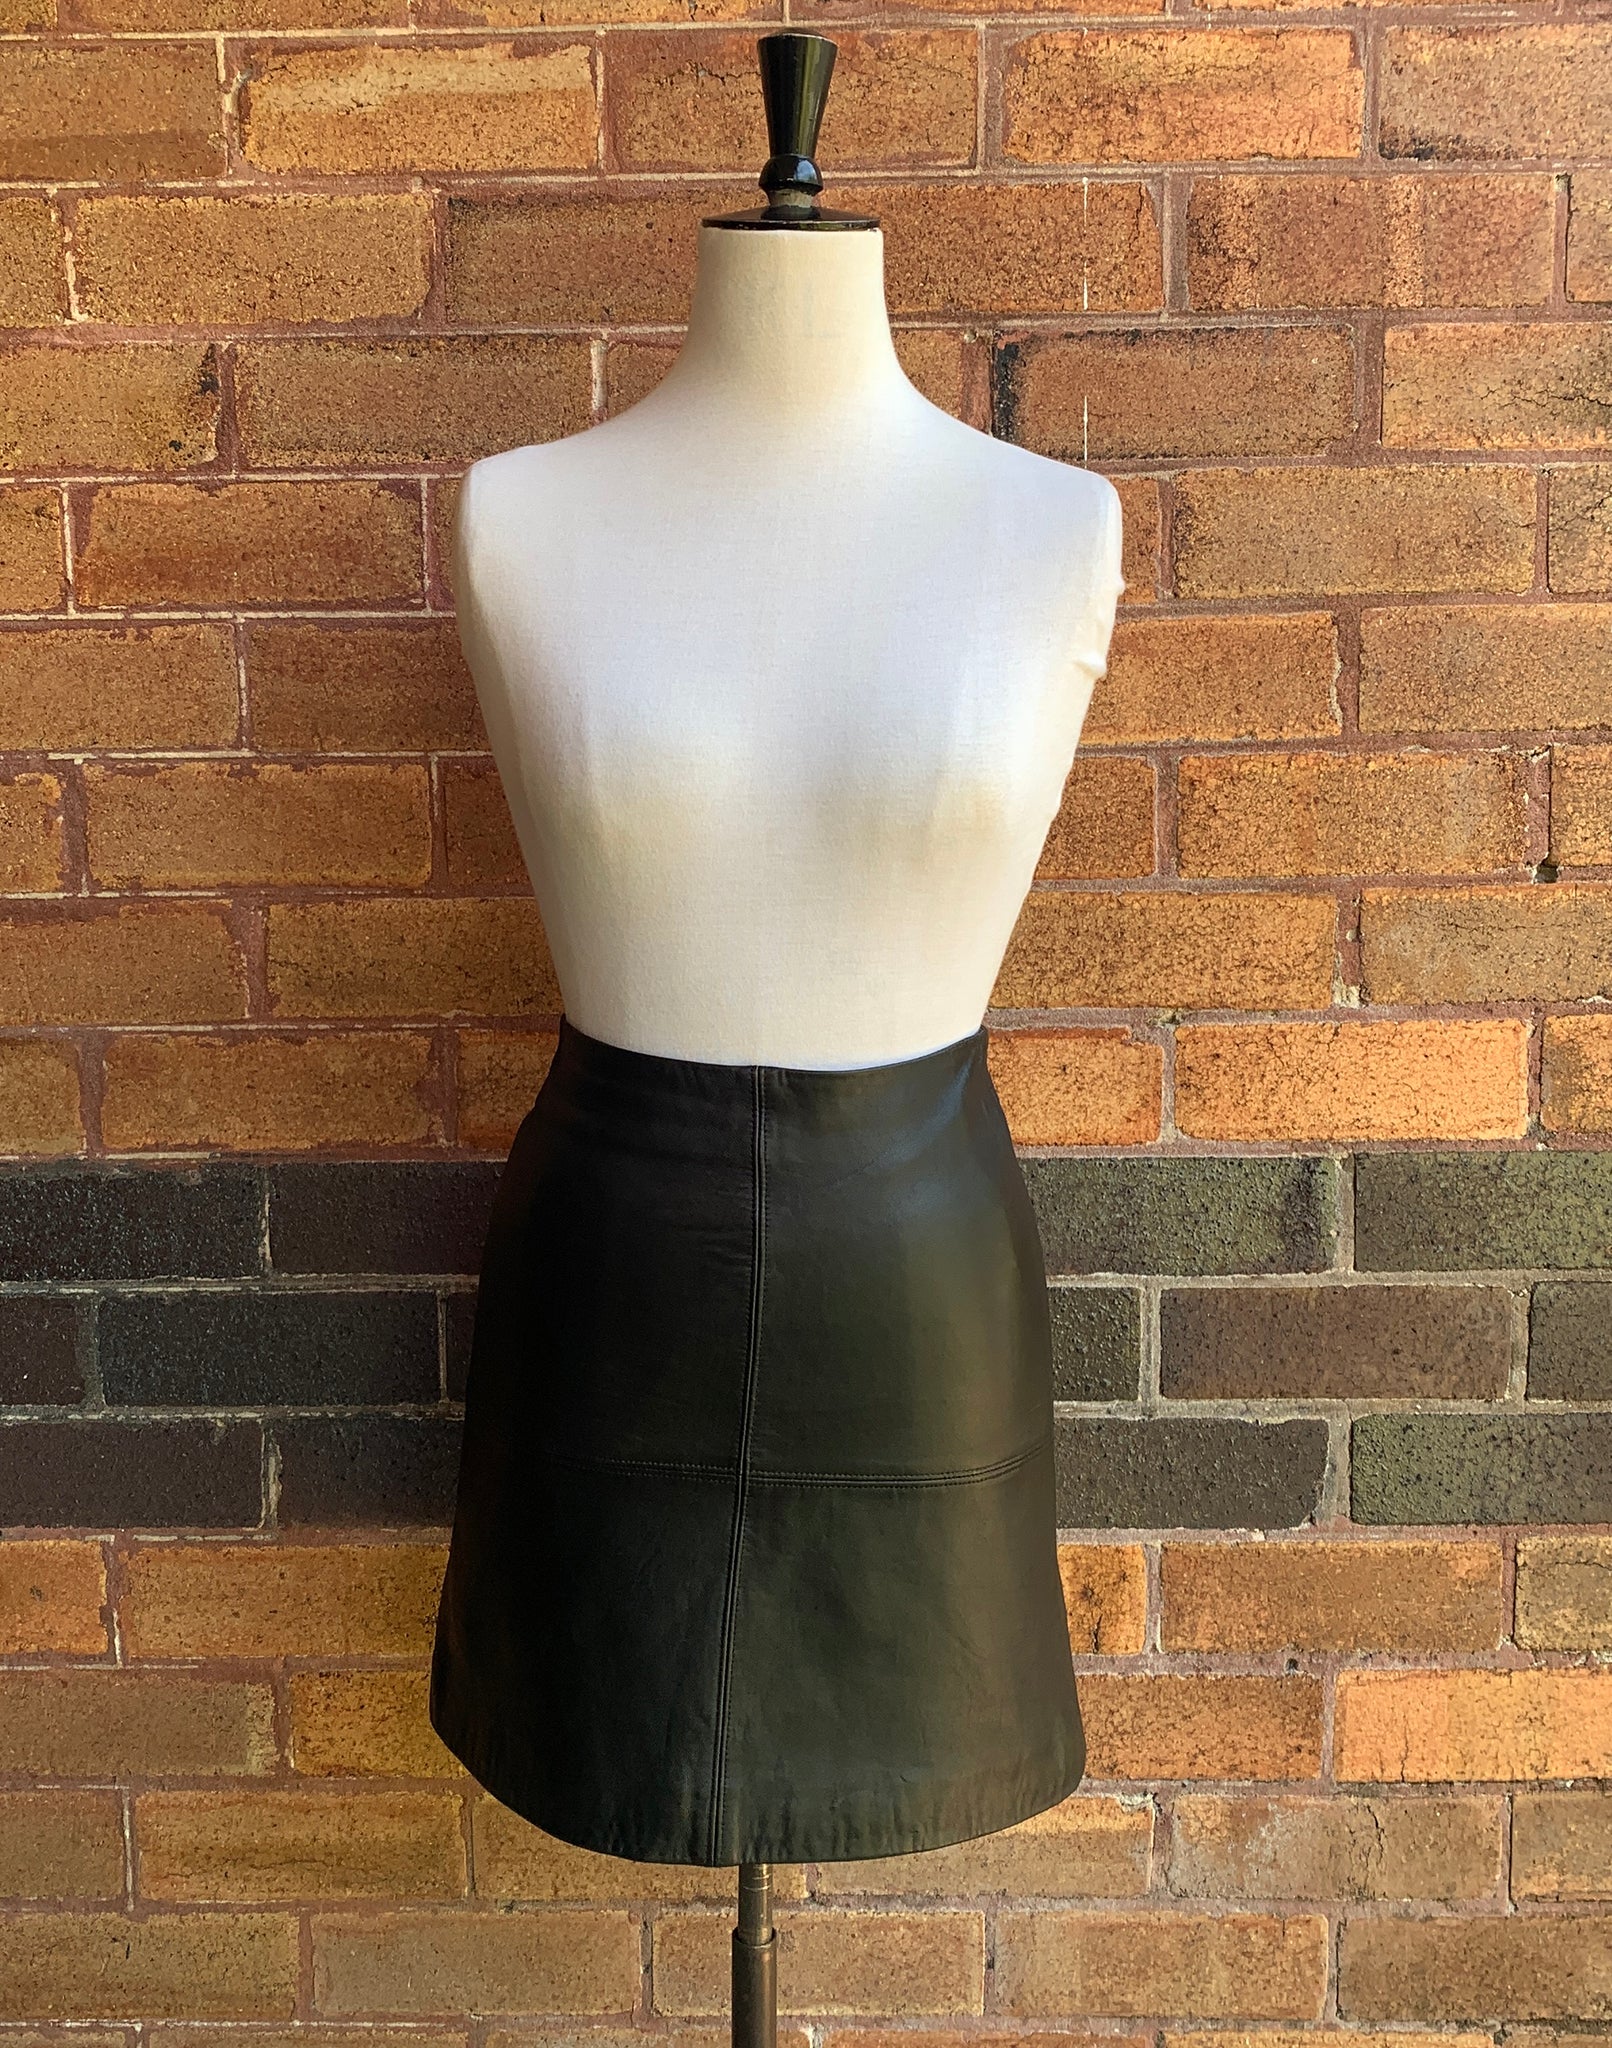 Kookai Y2K Black Leather Mini Skirt - Size XS / S